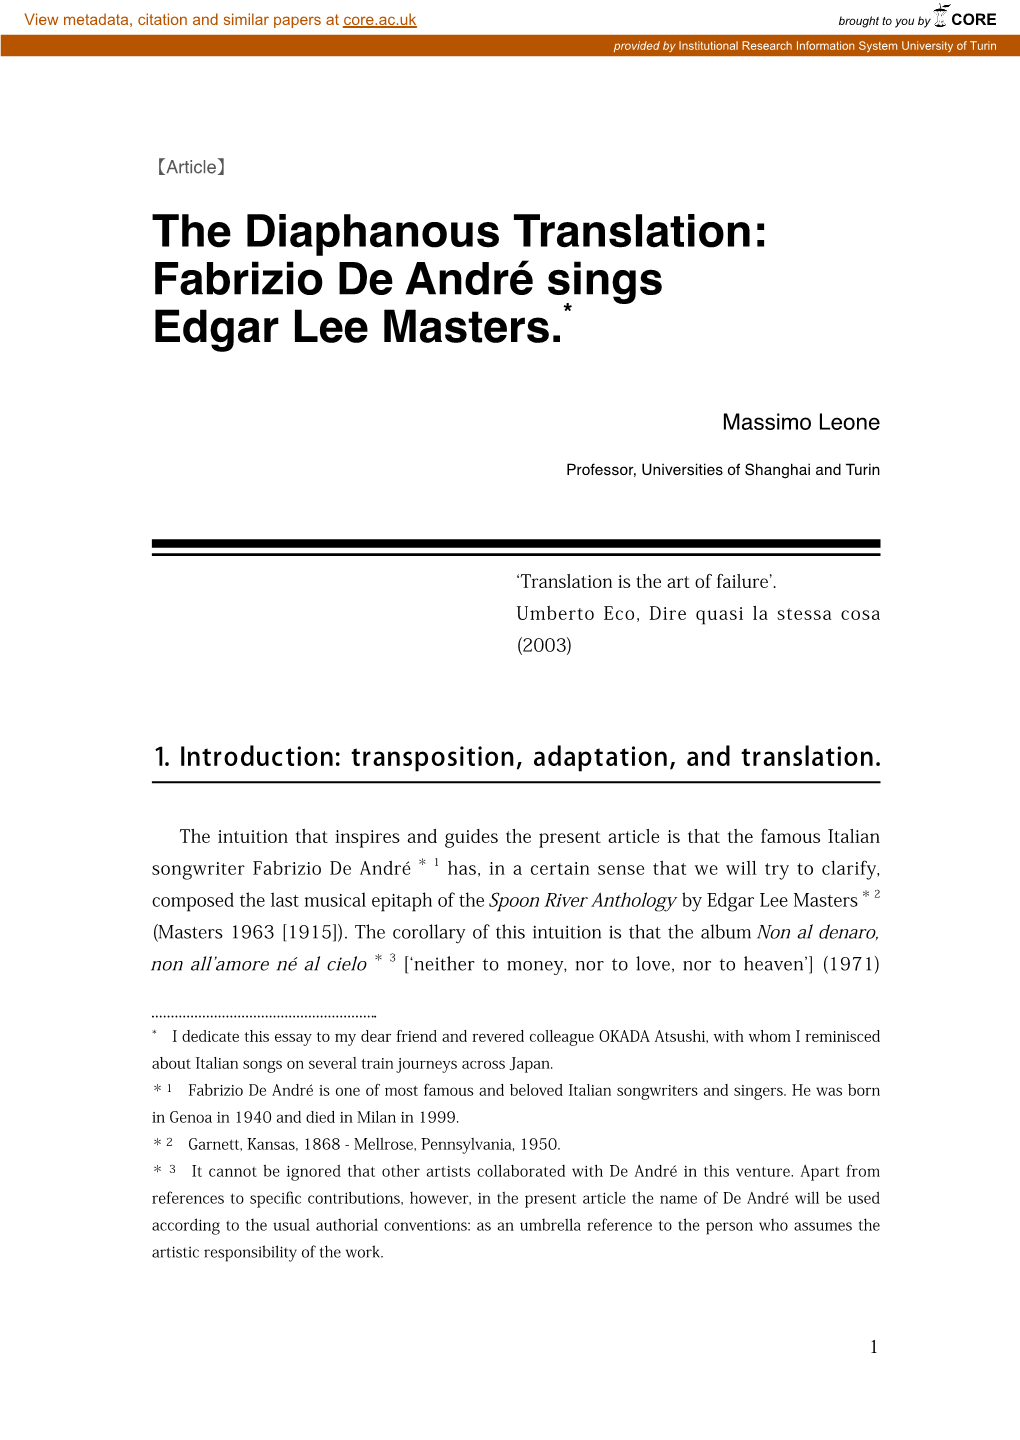 The Diaphanous Translation: Fabrizio De André Sings Edgar Lee Masters.*